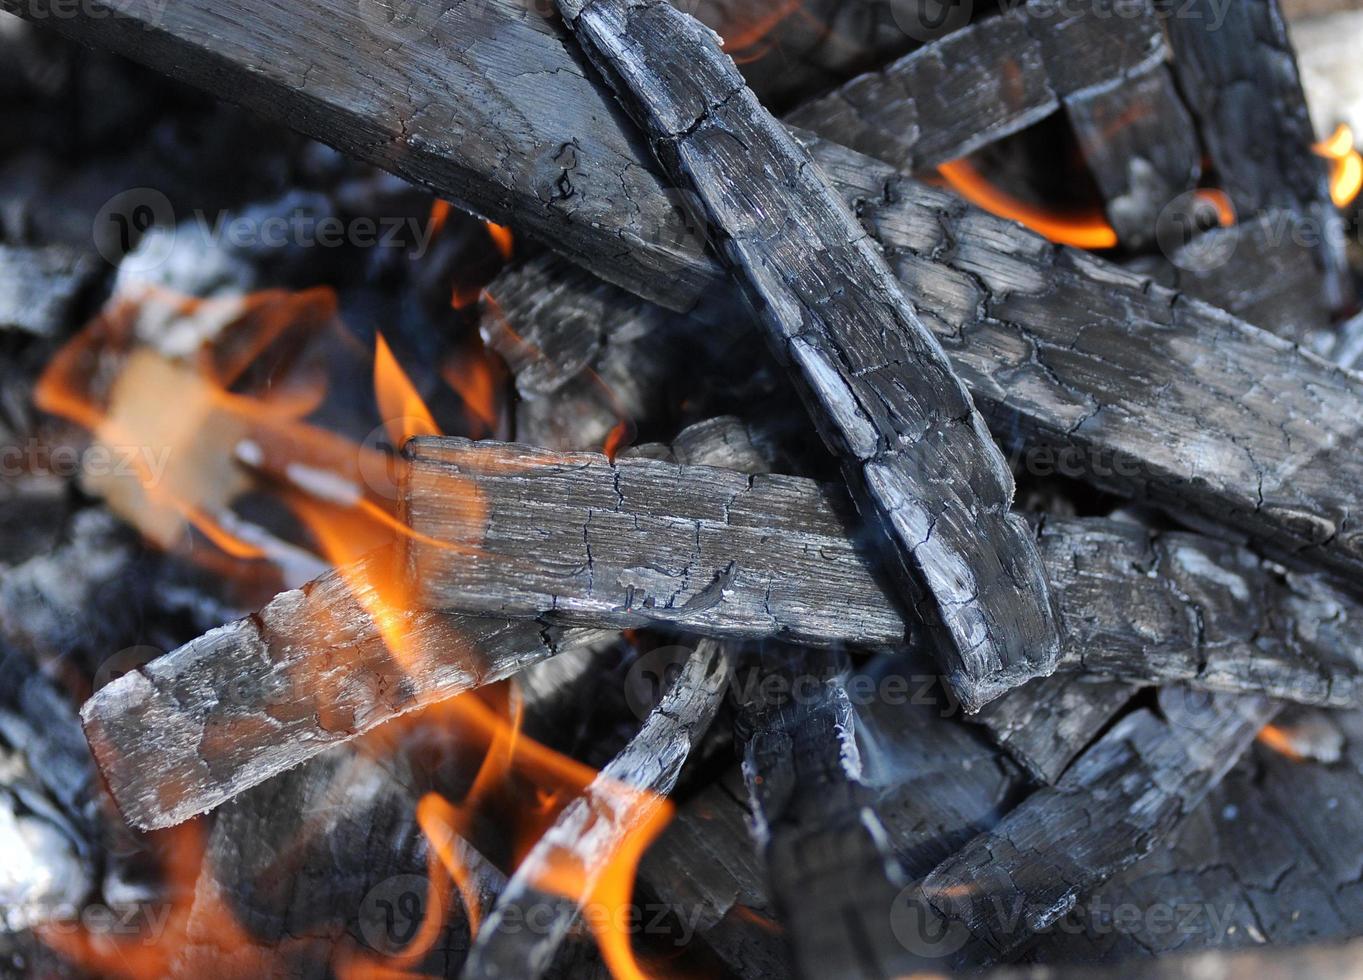 hot coals in the fire photo